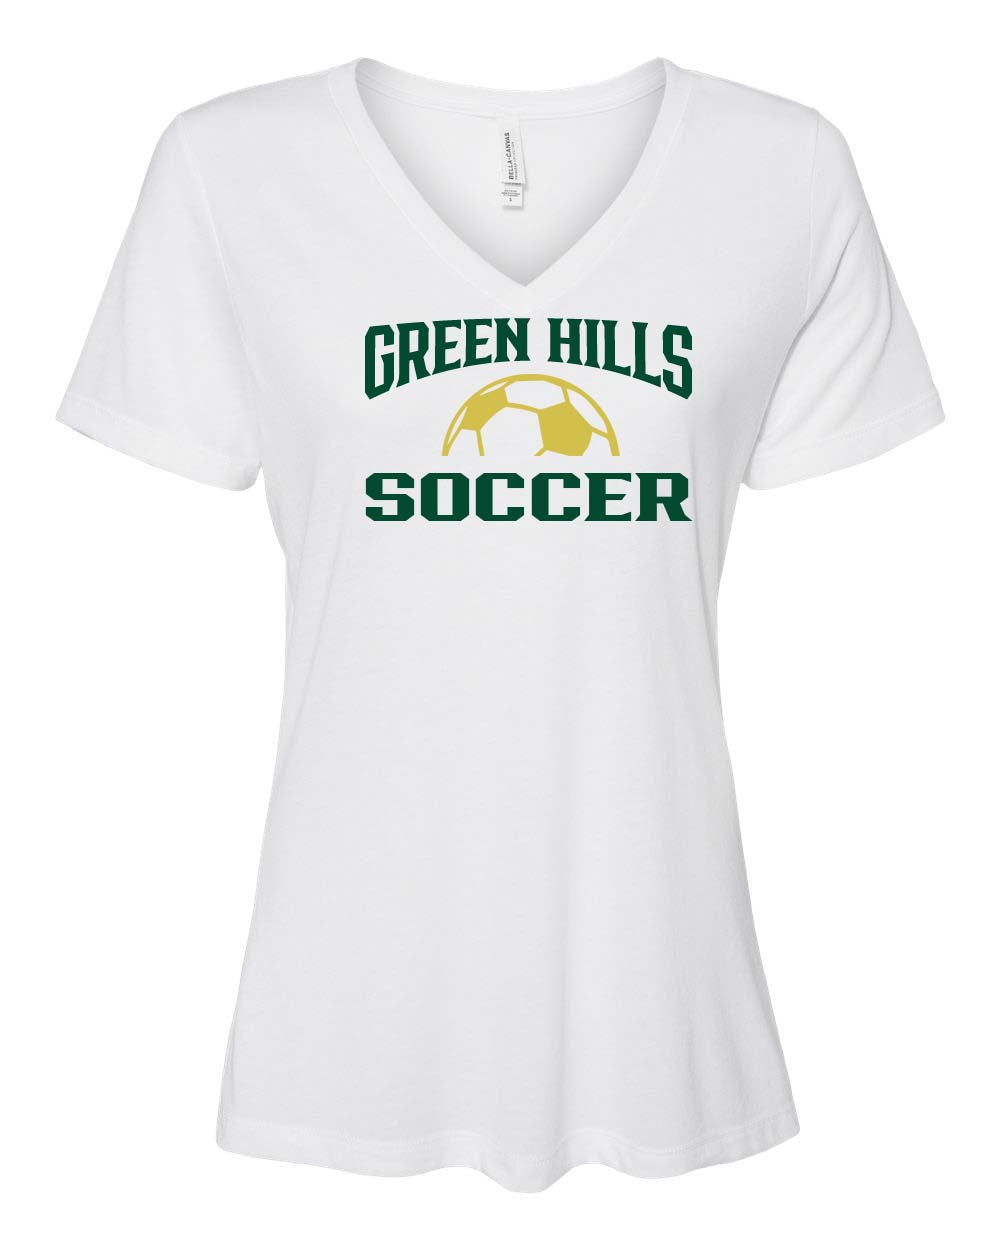 Green Hills Soccer Design 1 V-neck T-shirt